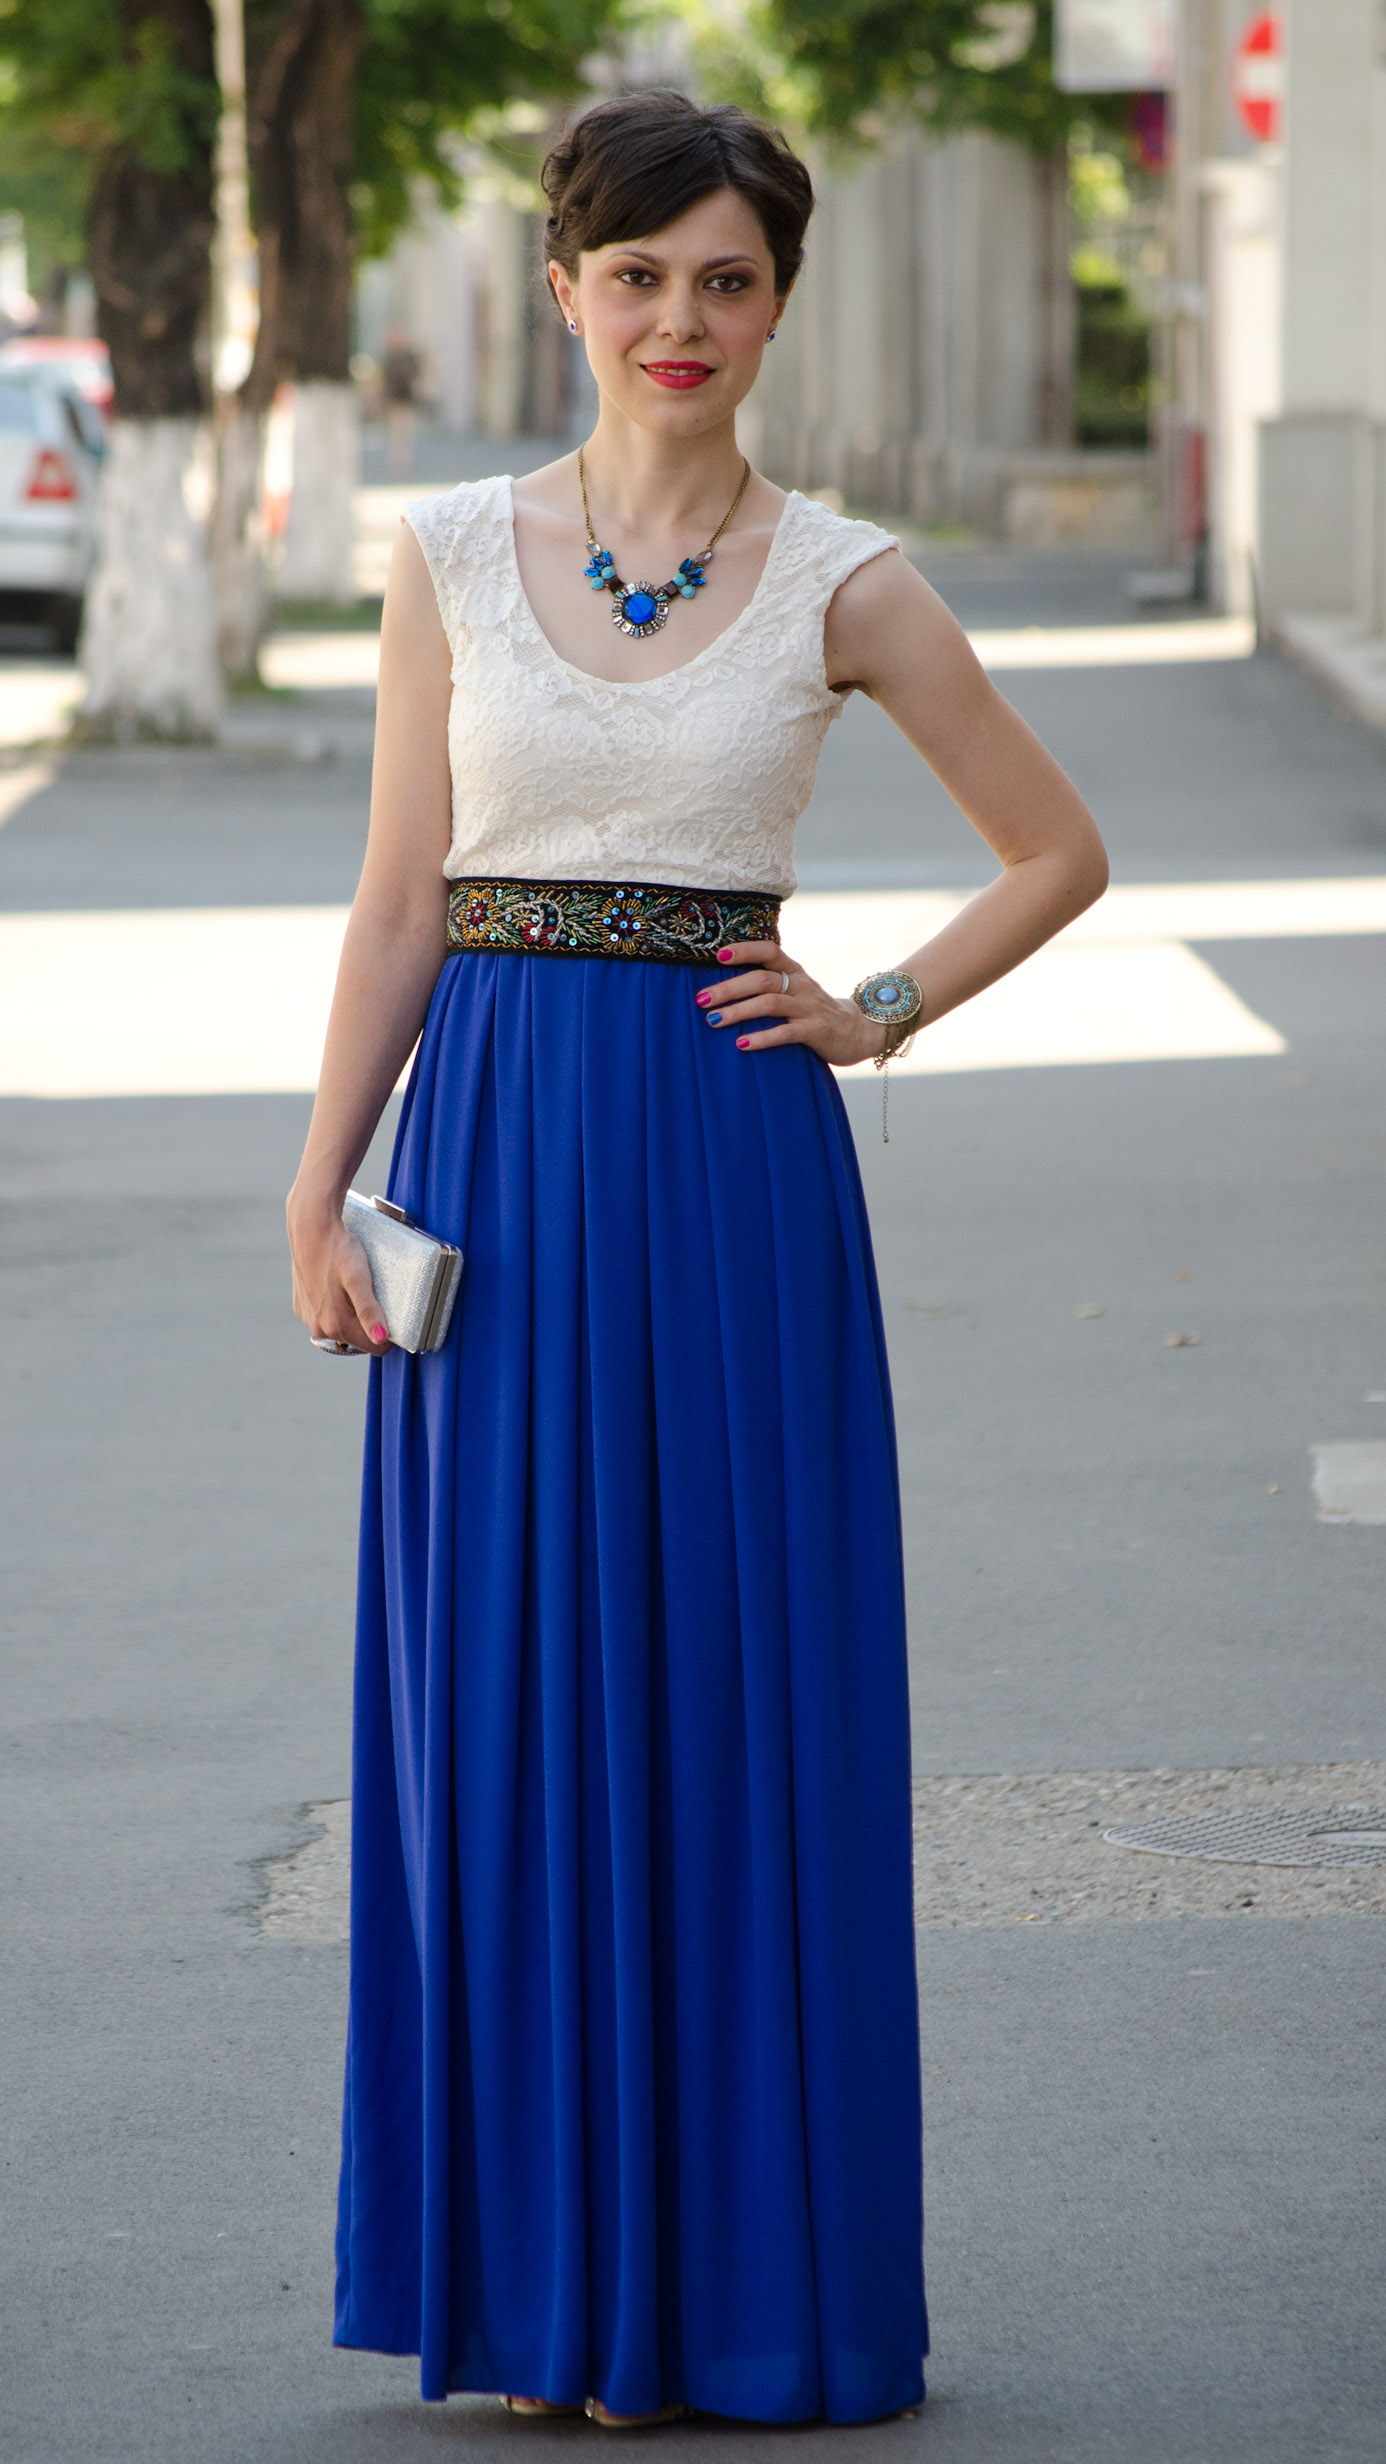 maxi dress cobalt blue white lace statement necklace blue topper hat wedding attire handmade waistband